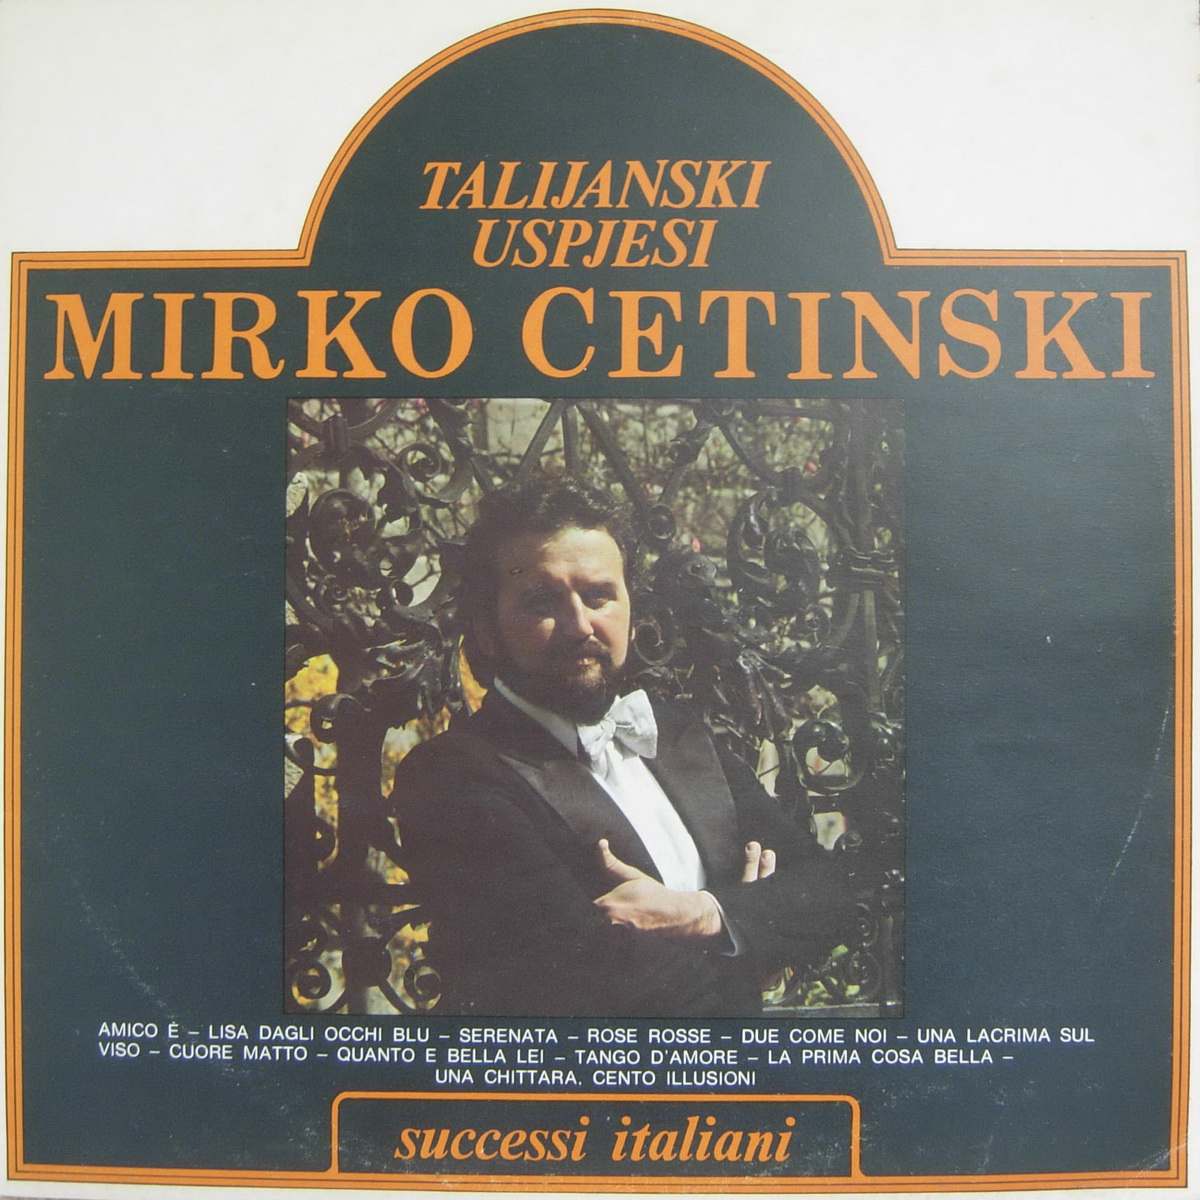 Mirko Cetinski 1984 Talijanski uspjesi a